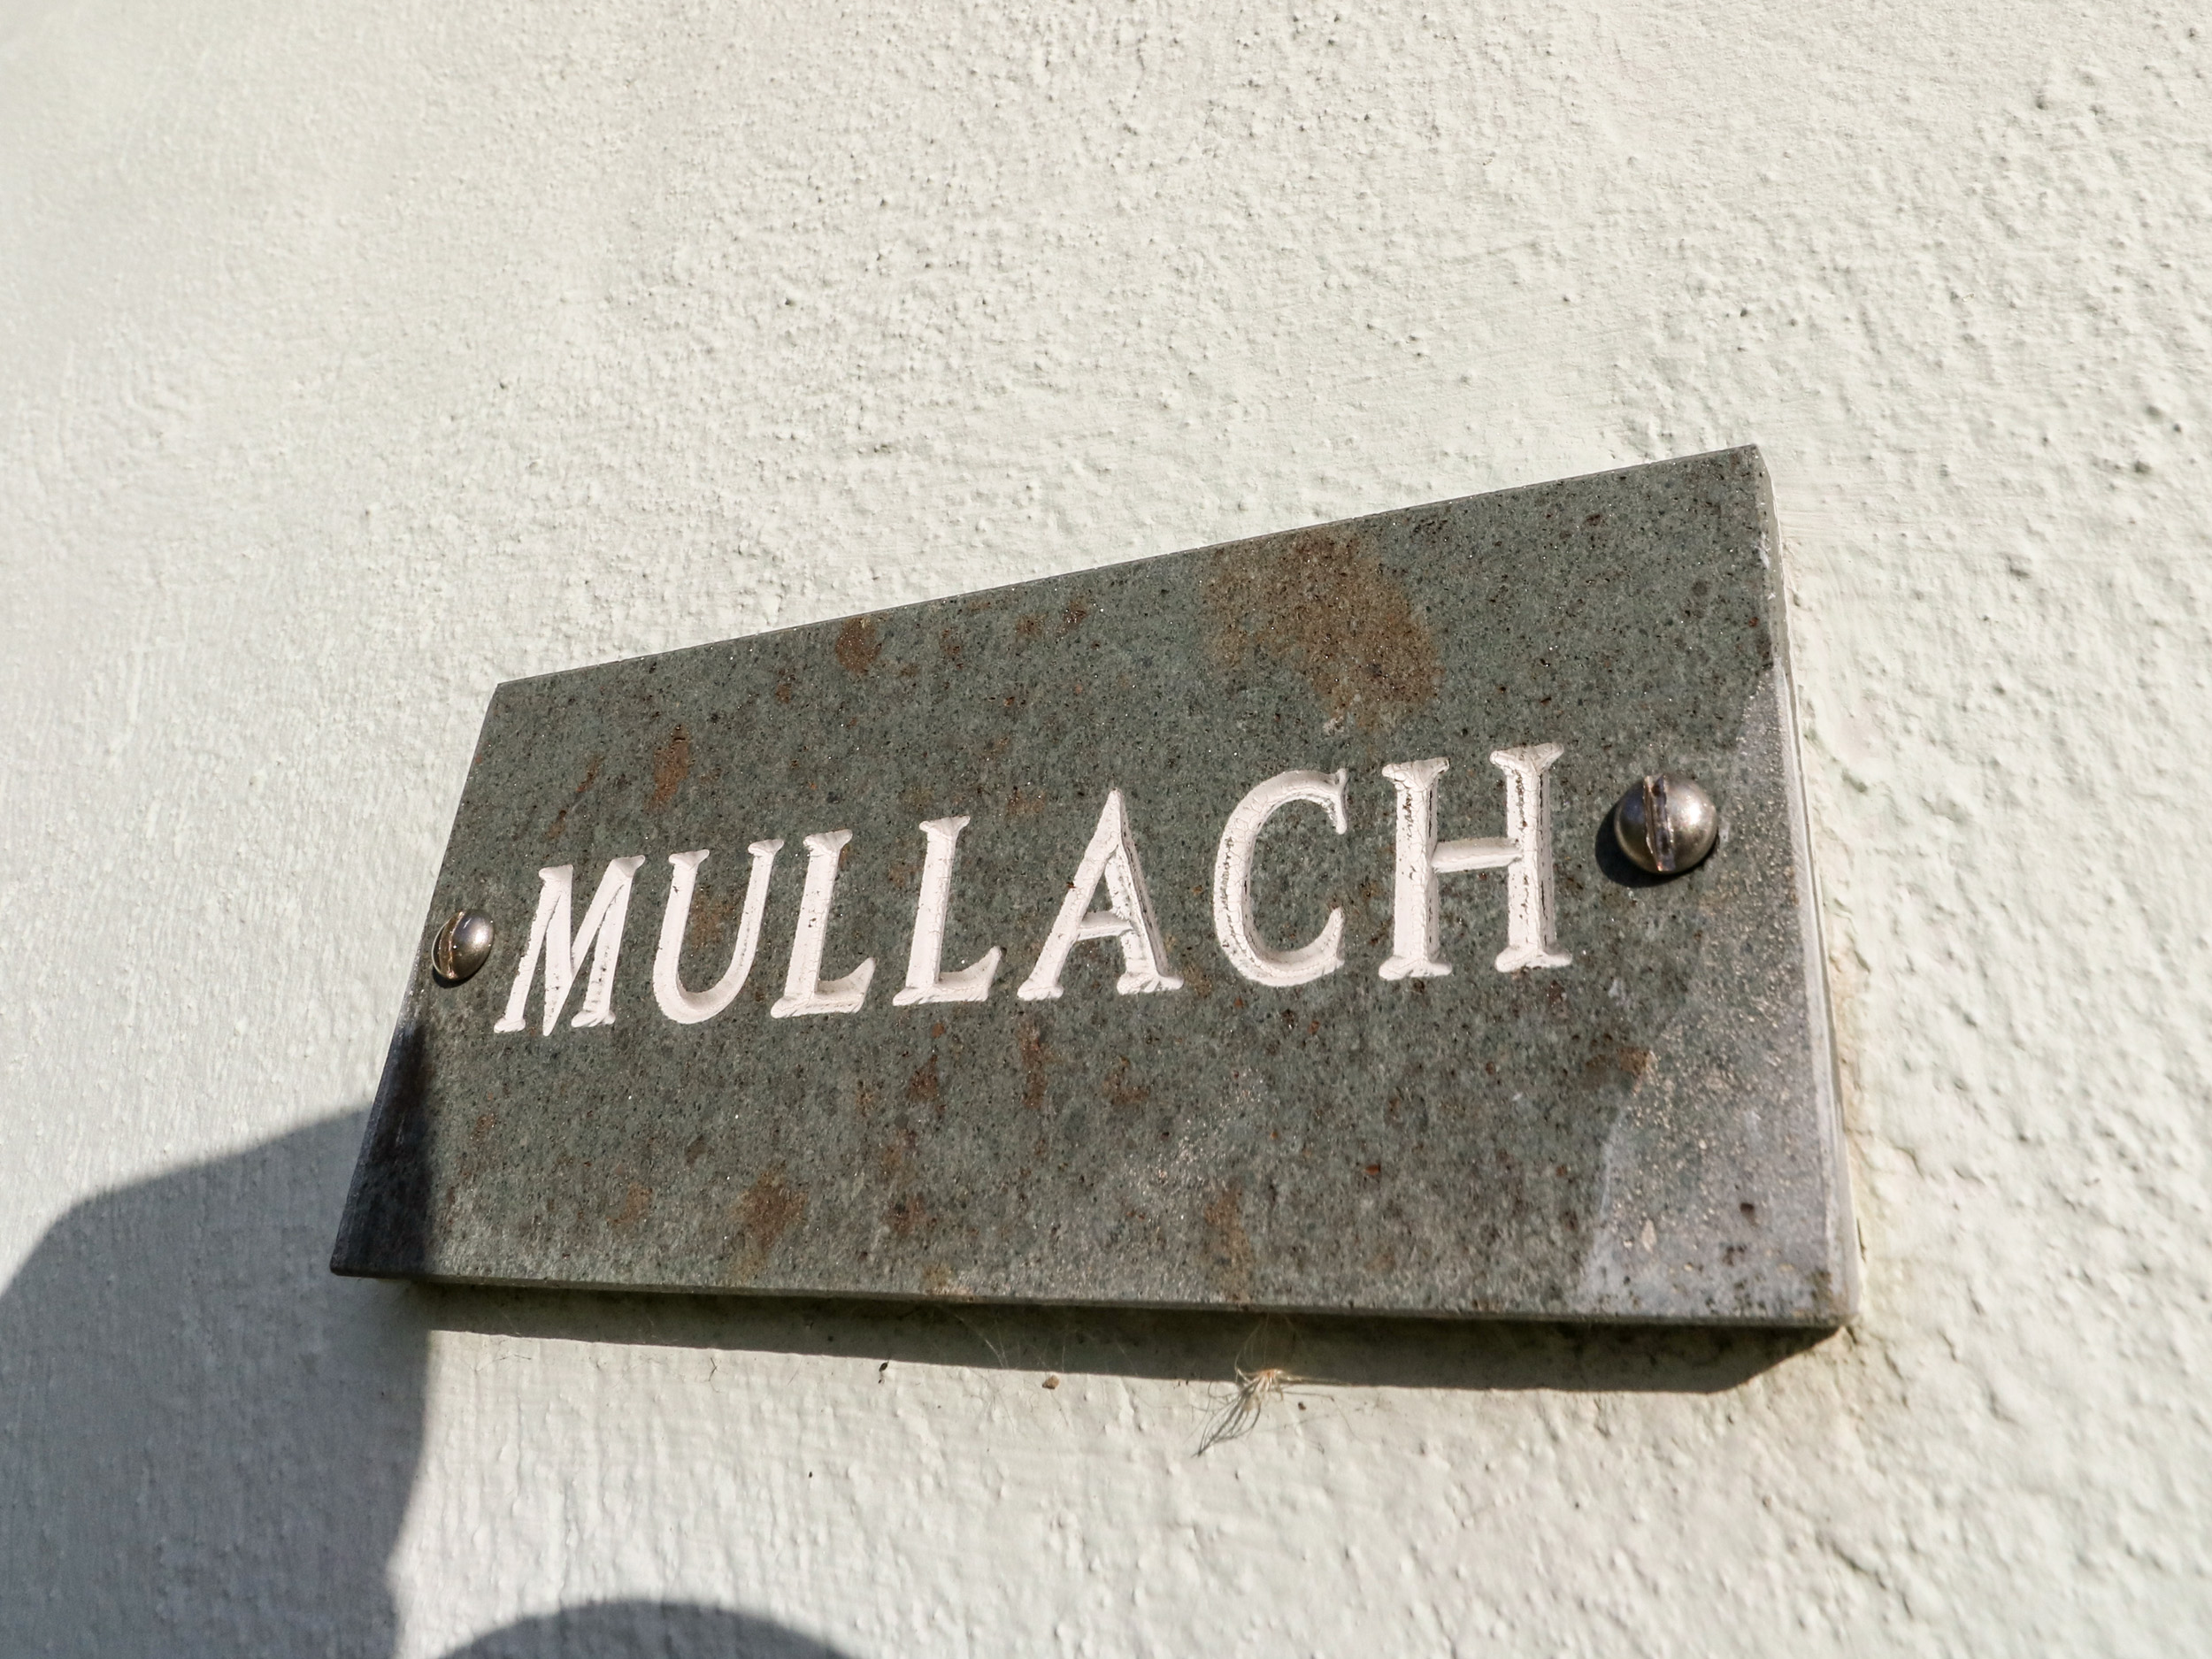 Mullach, Scotland